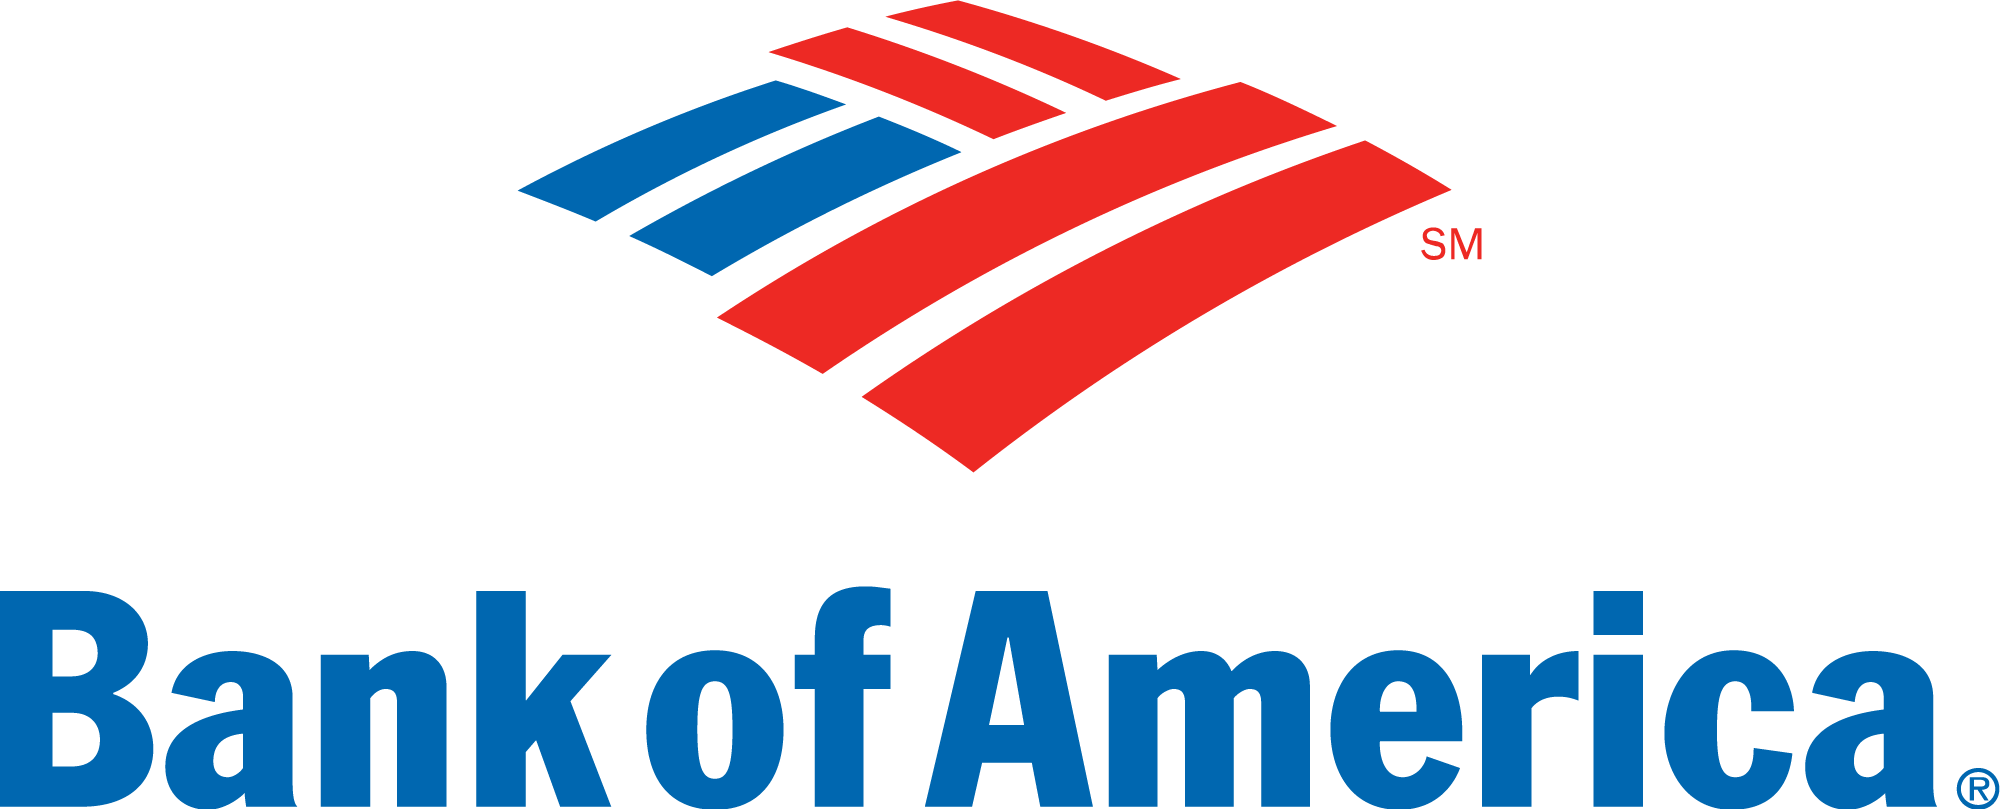 bank of america logo transparent